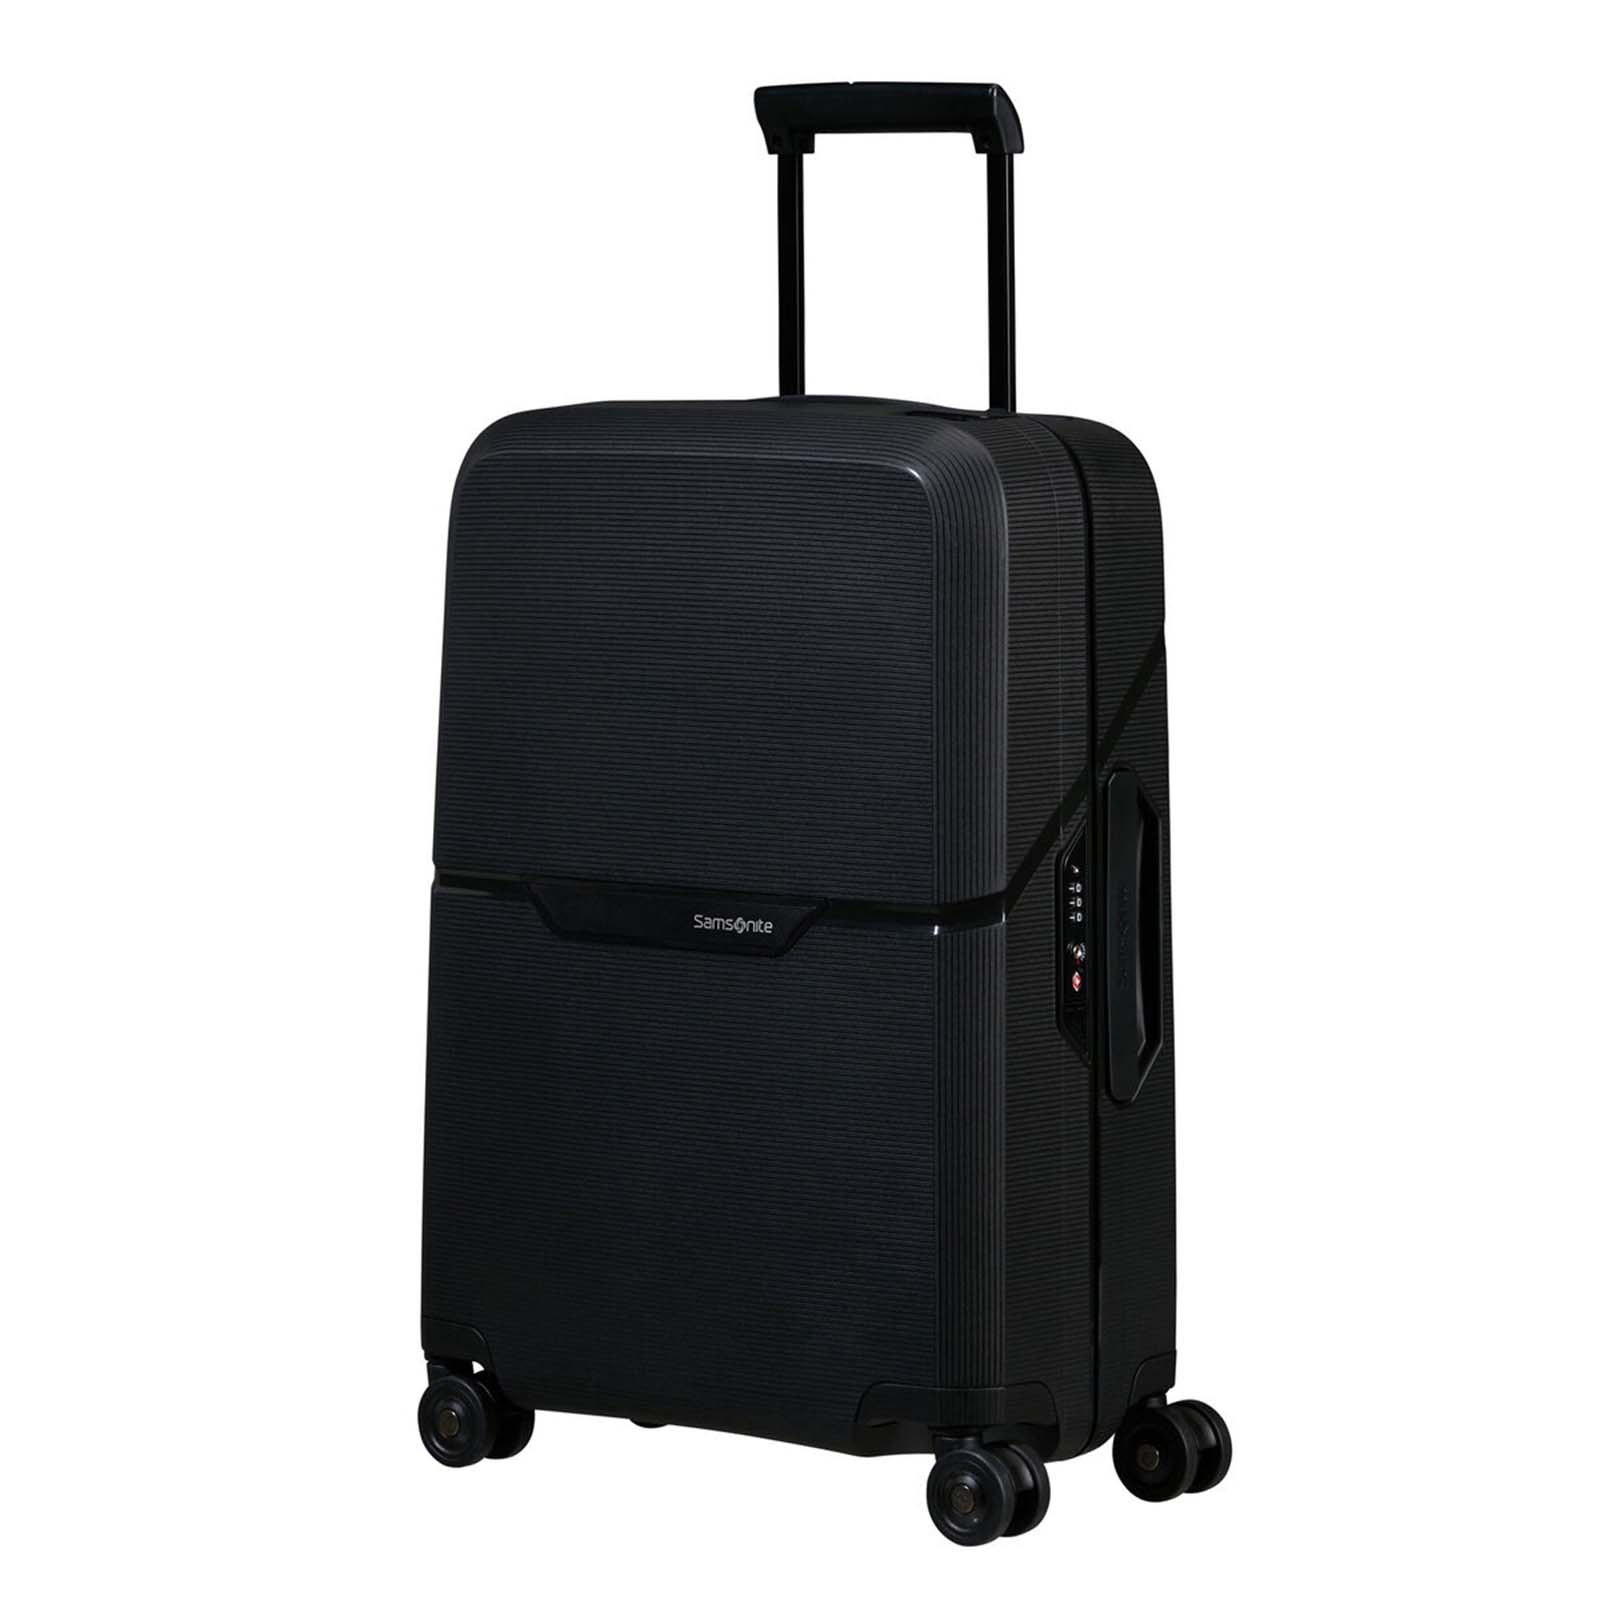 Samsonite-Magnum-Eco-55cm-Carry-On-Suitcase-Graphite-Front-Angle